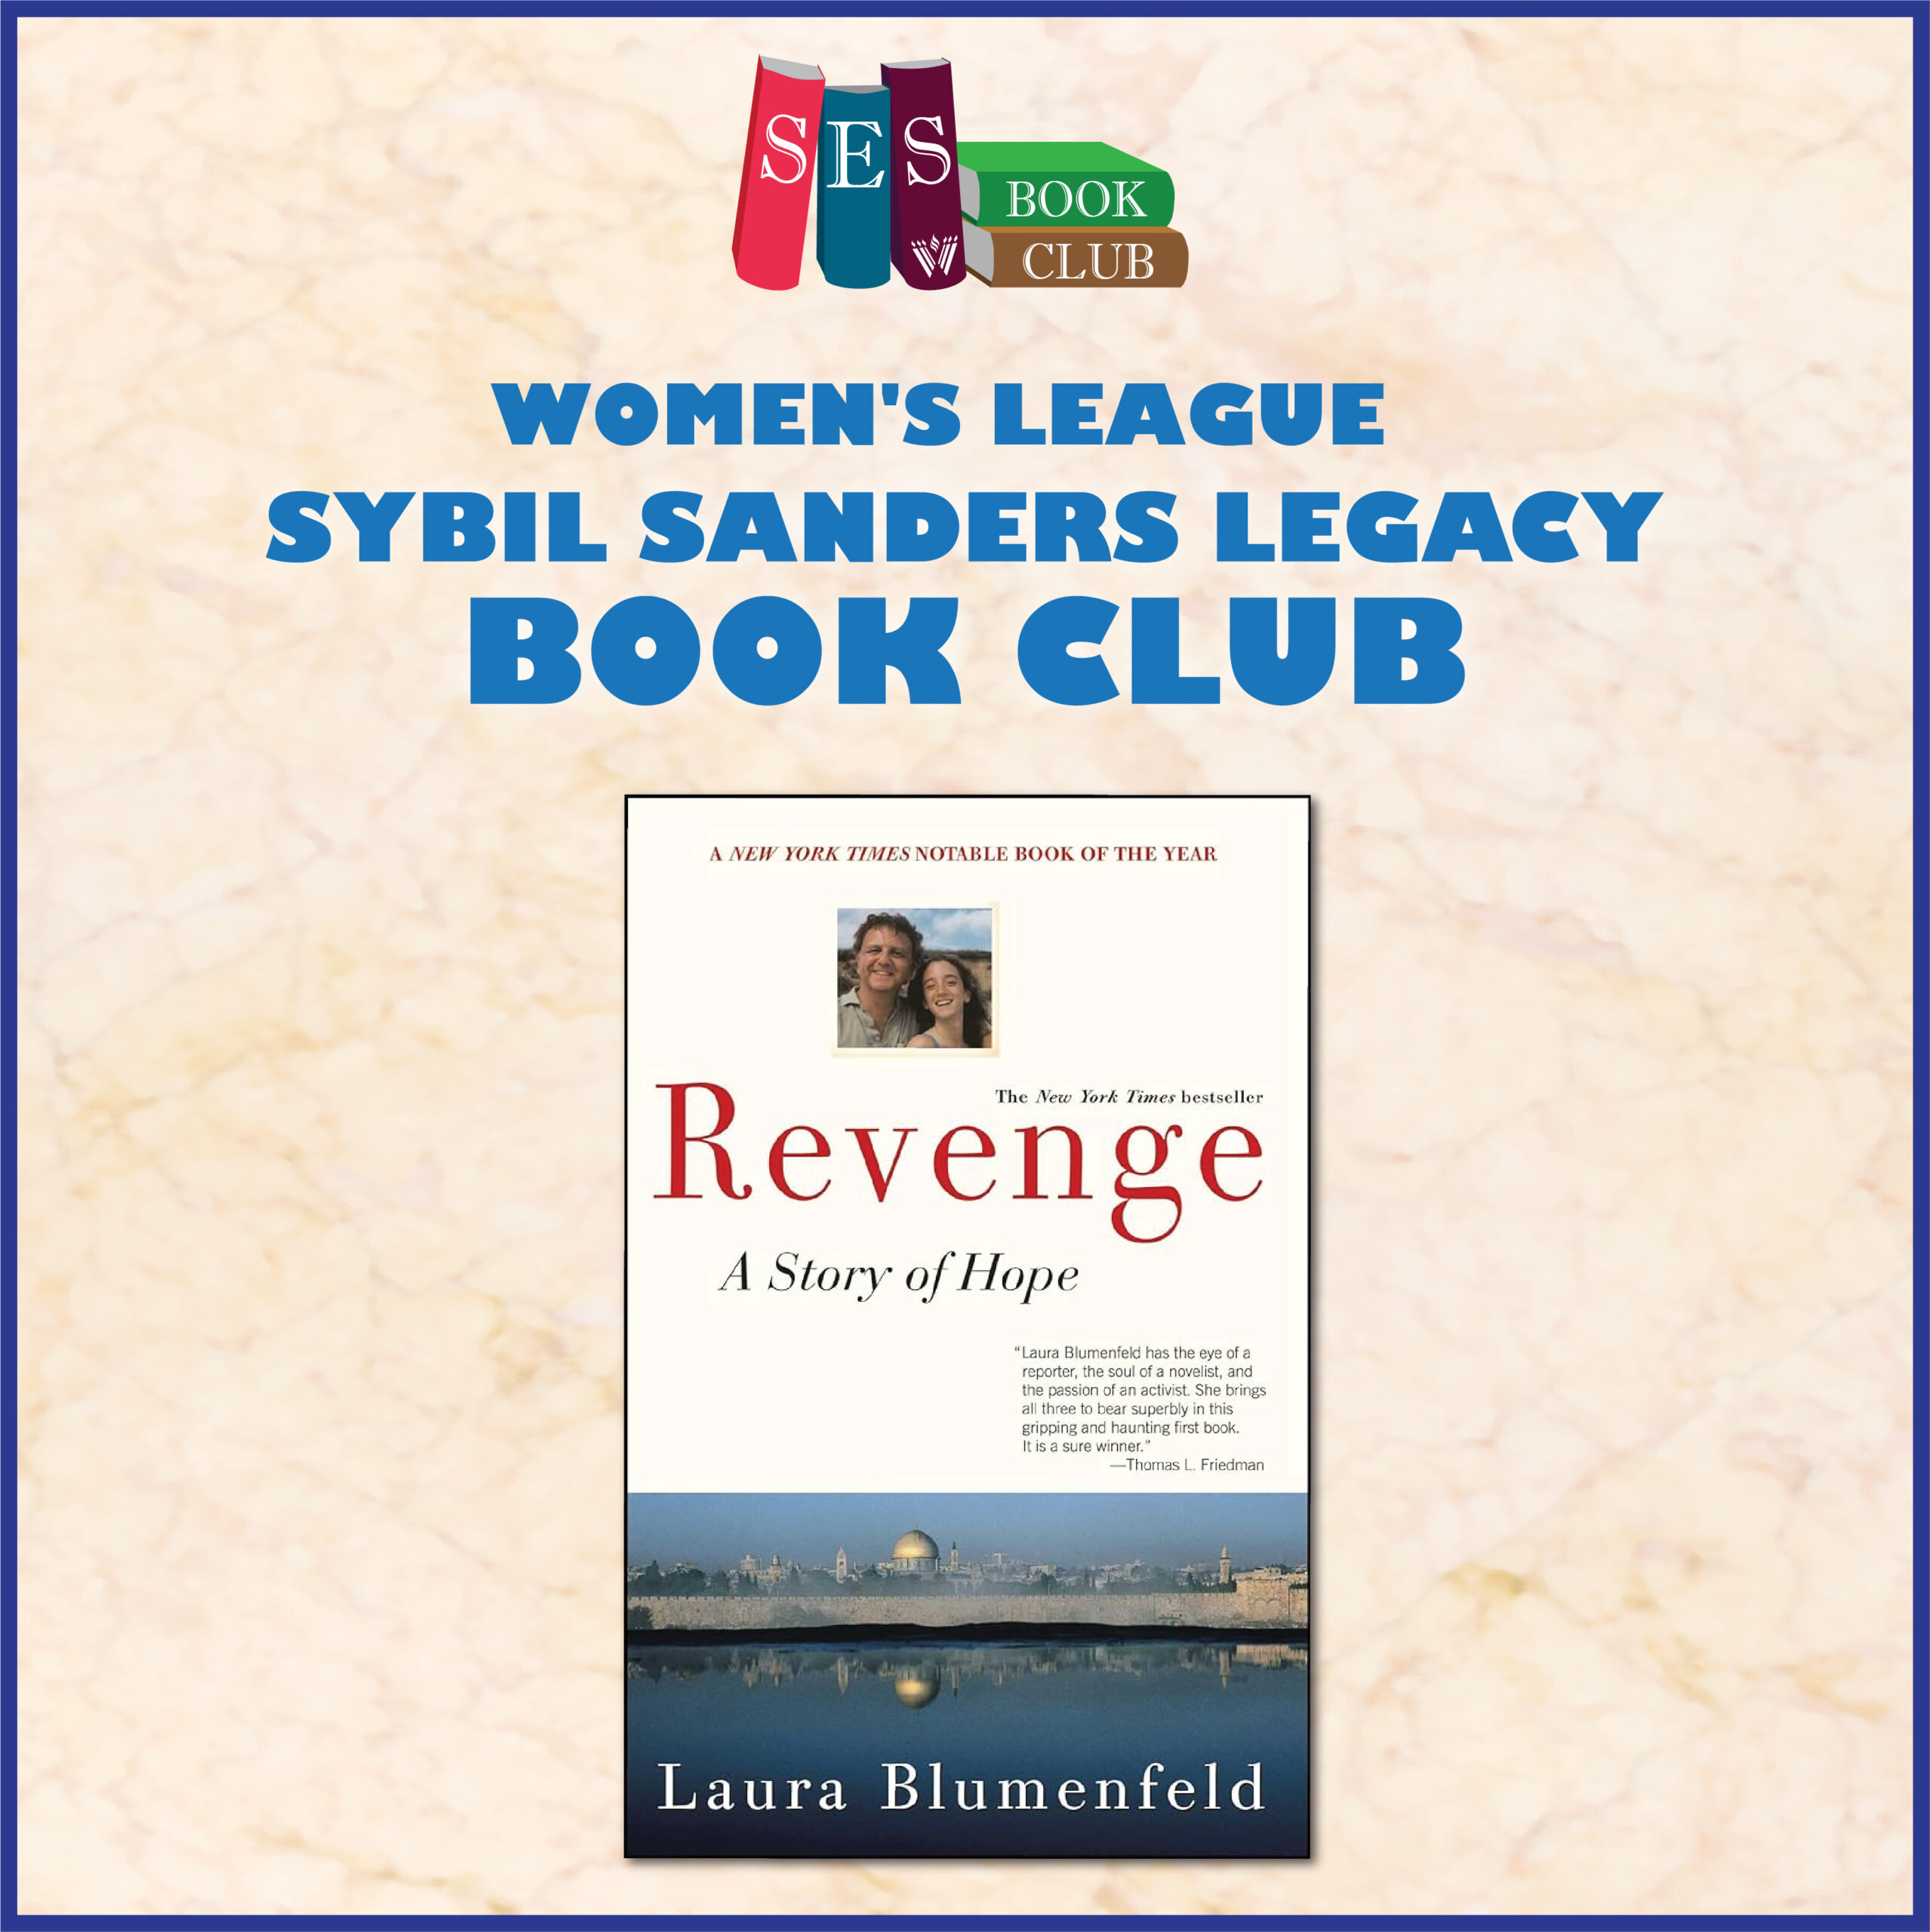 Women's League Book Club